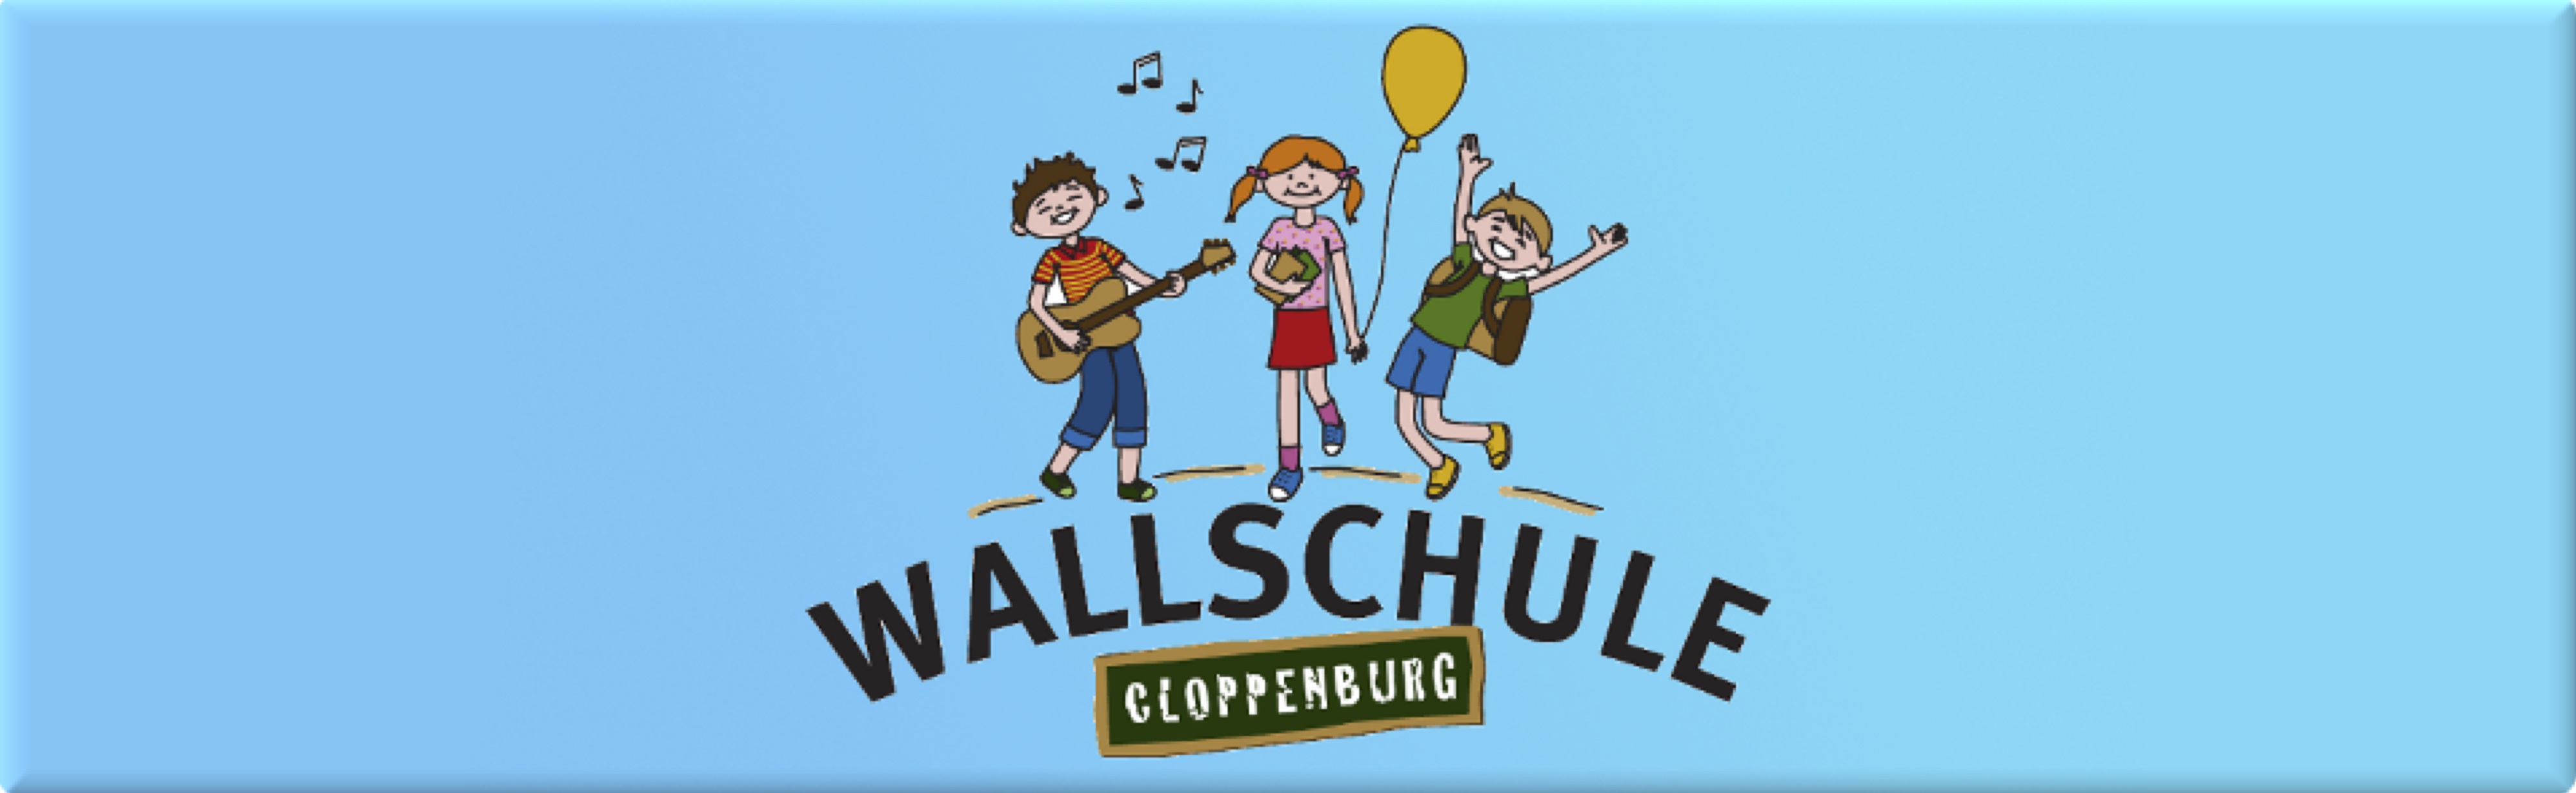 Wallschule Cloppenburg